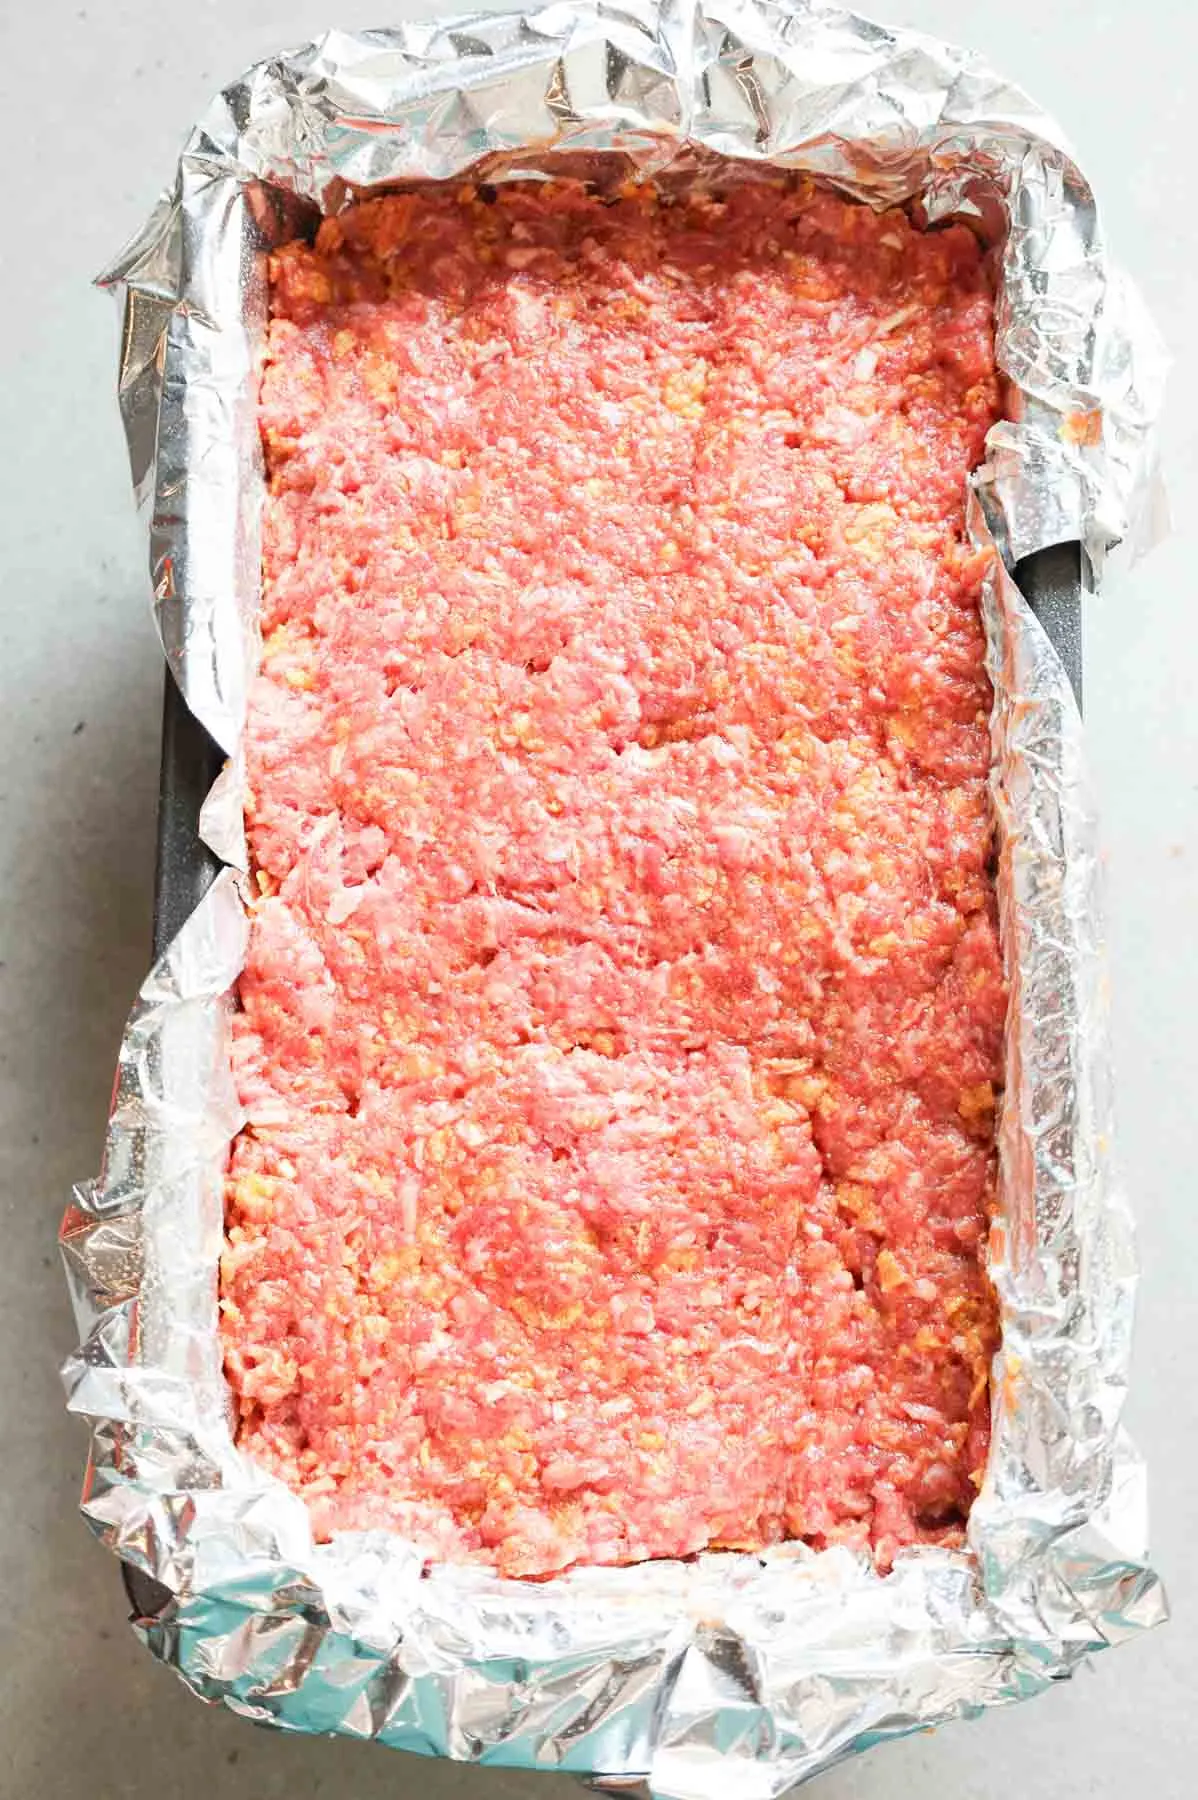 meatloaf mixture in a foil lined loaf pan